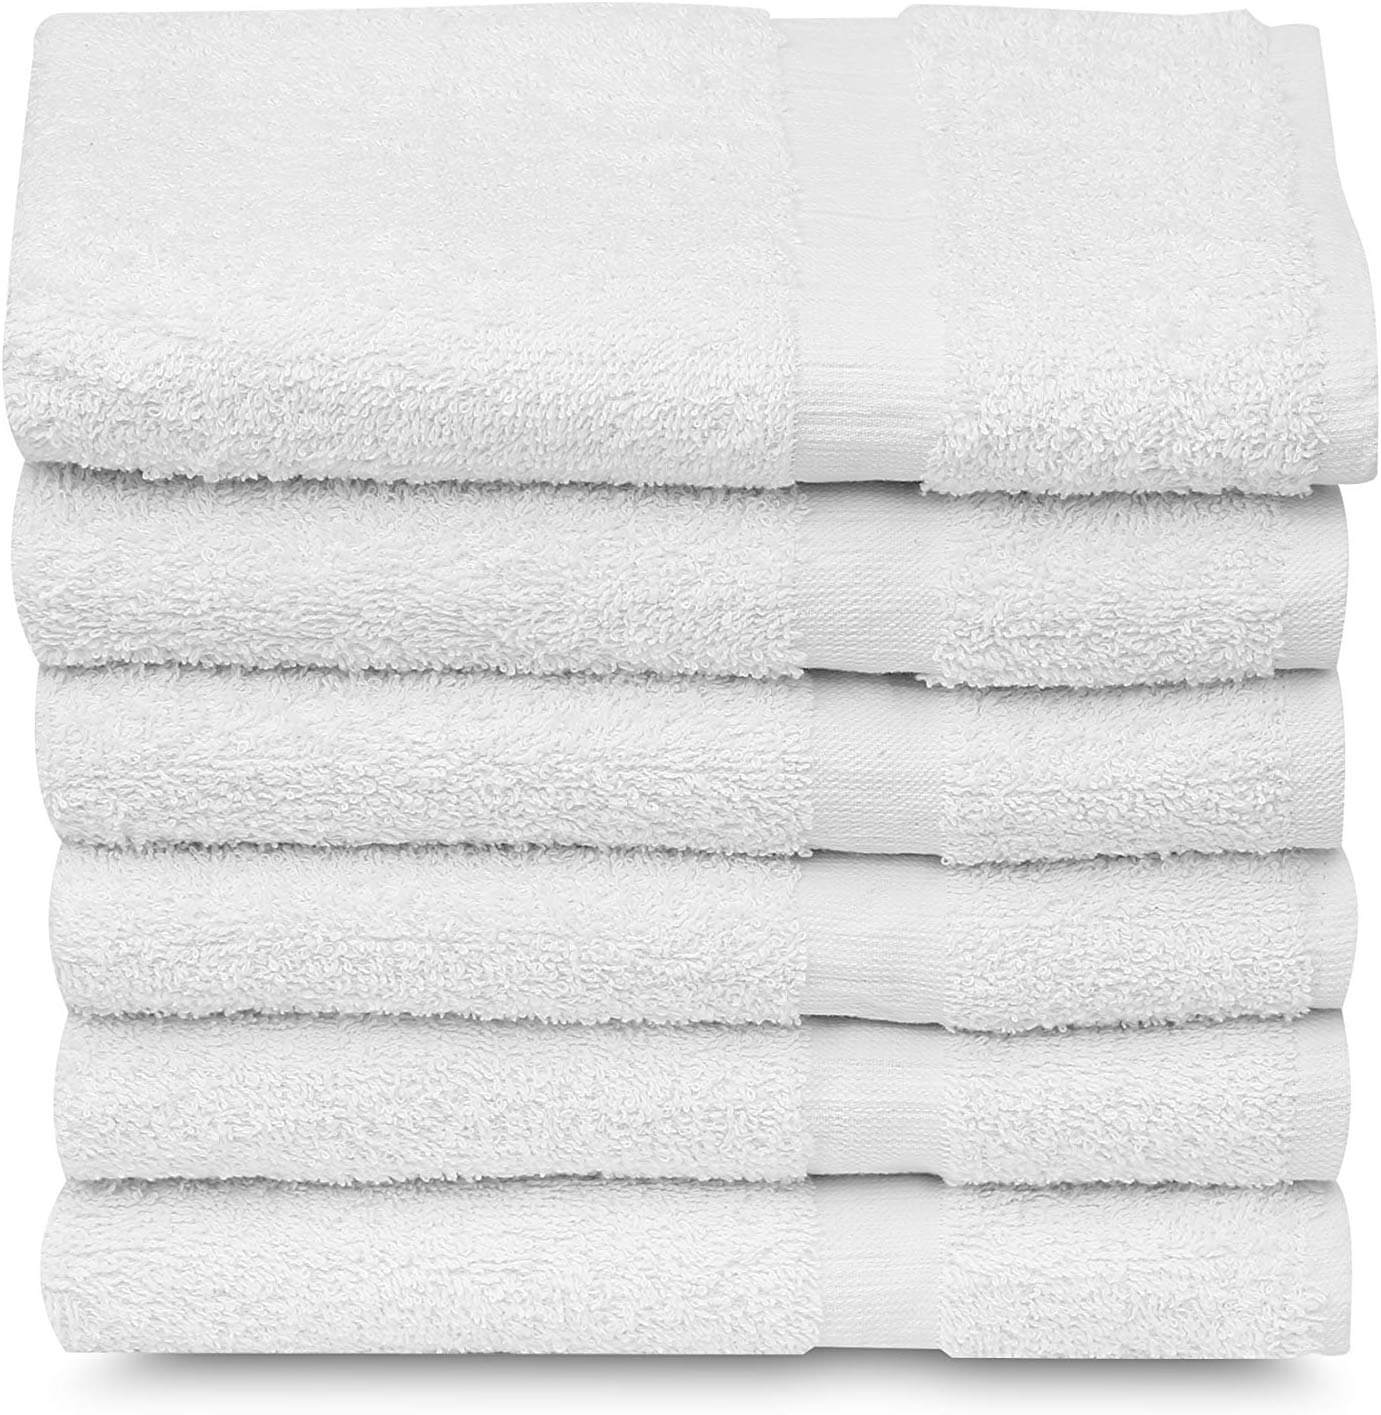 Wholesale Bulk Hand Towels